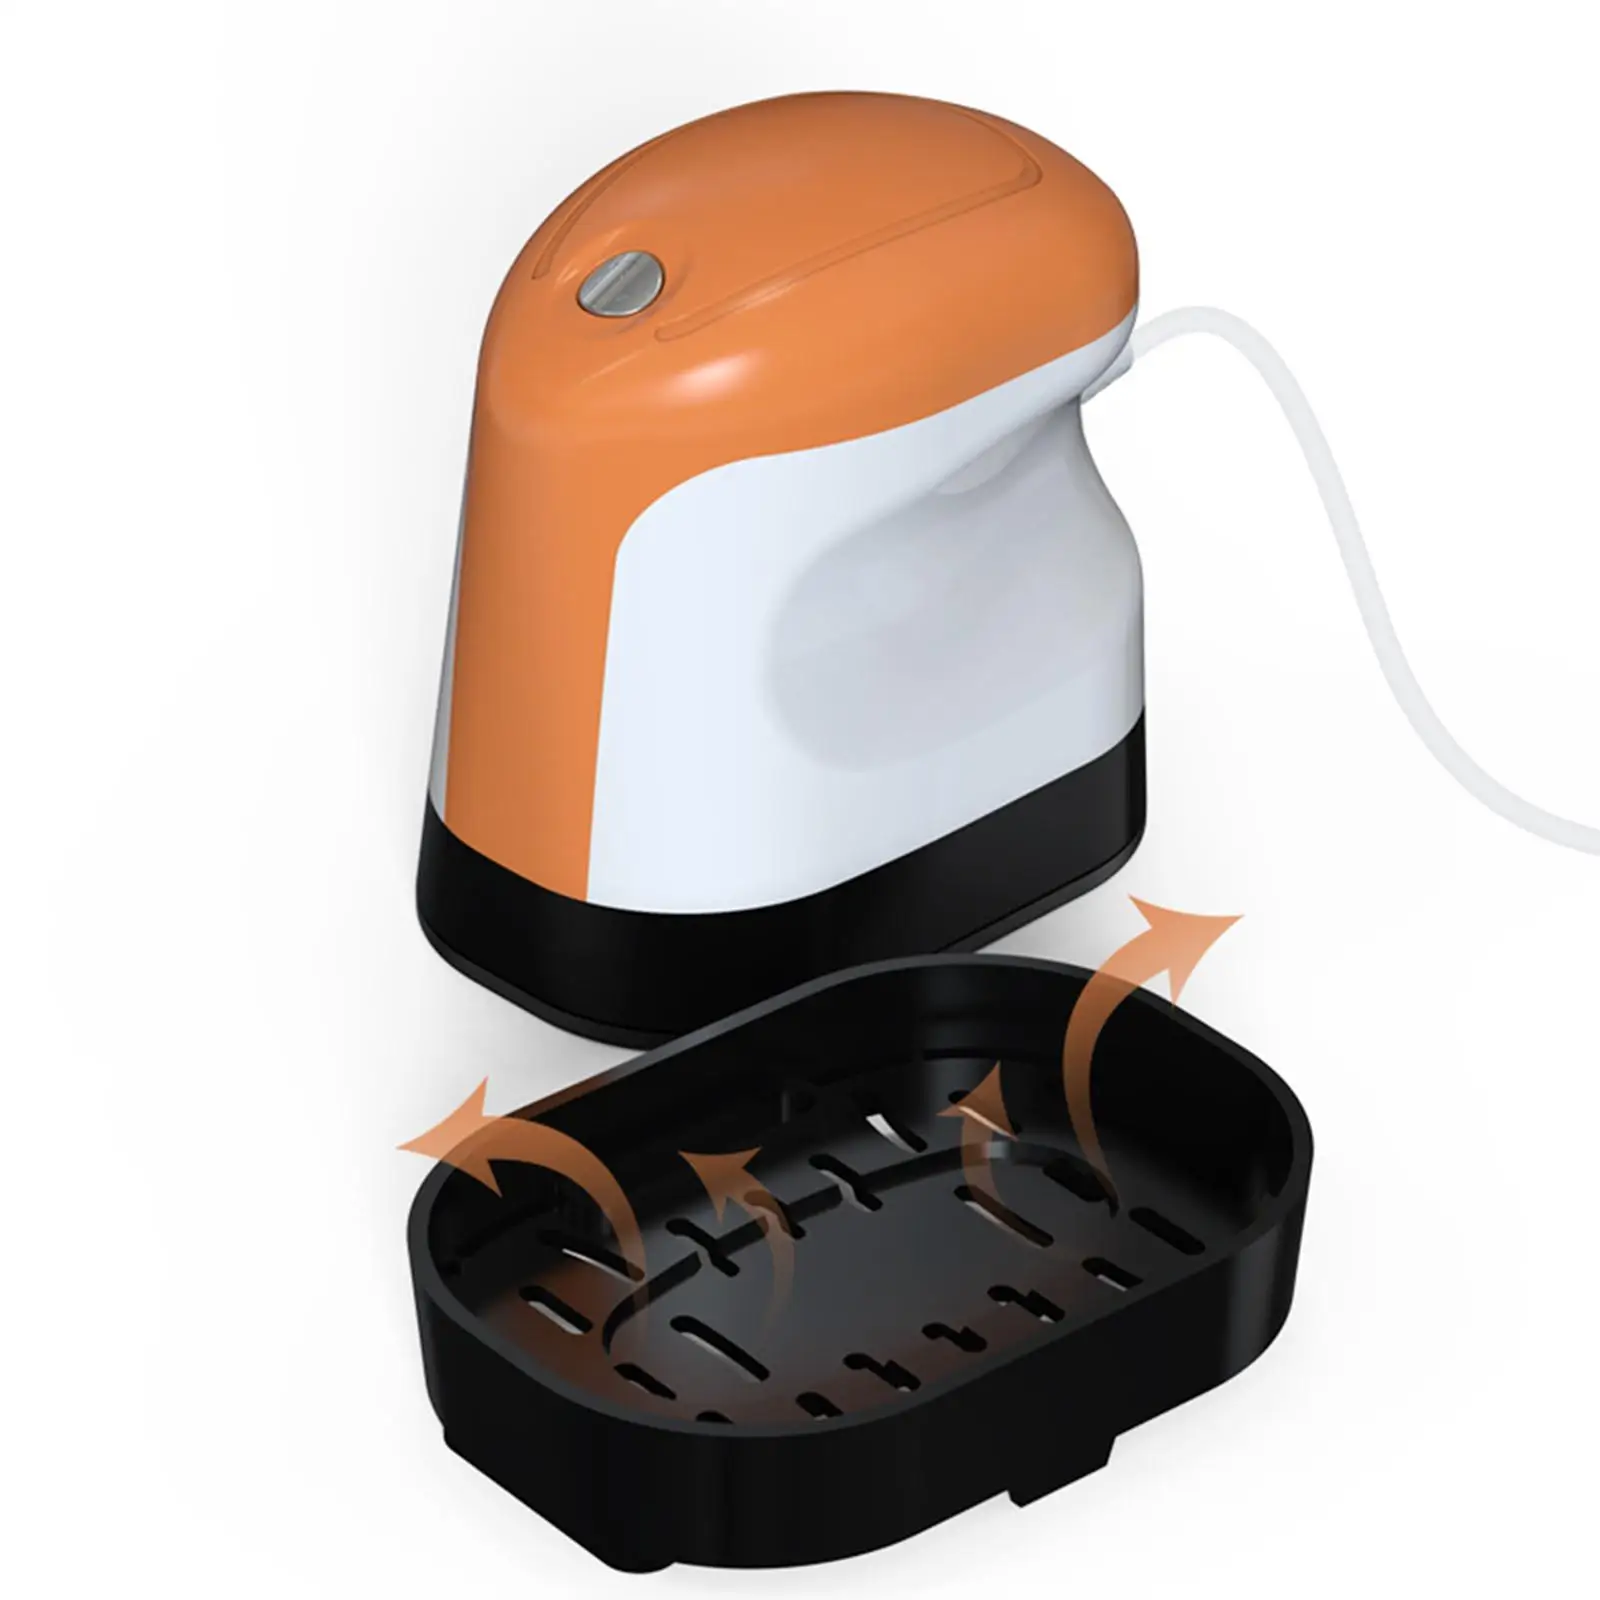 Mini Heat Press Machine Easy to Use DIY Iron-On Transfer Maker for T-Shirt Mugs Bag